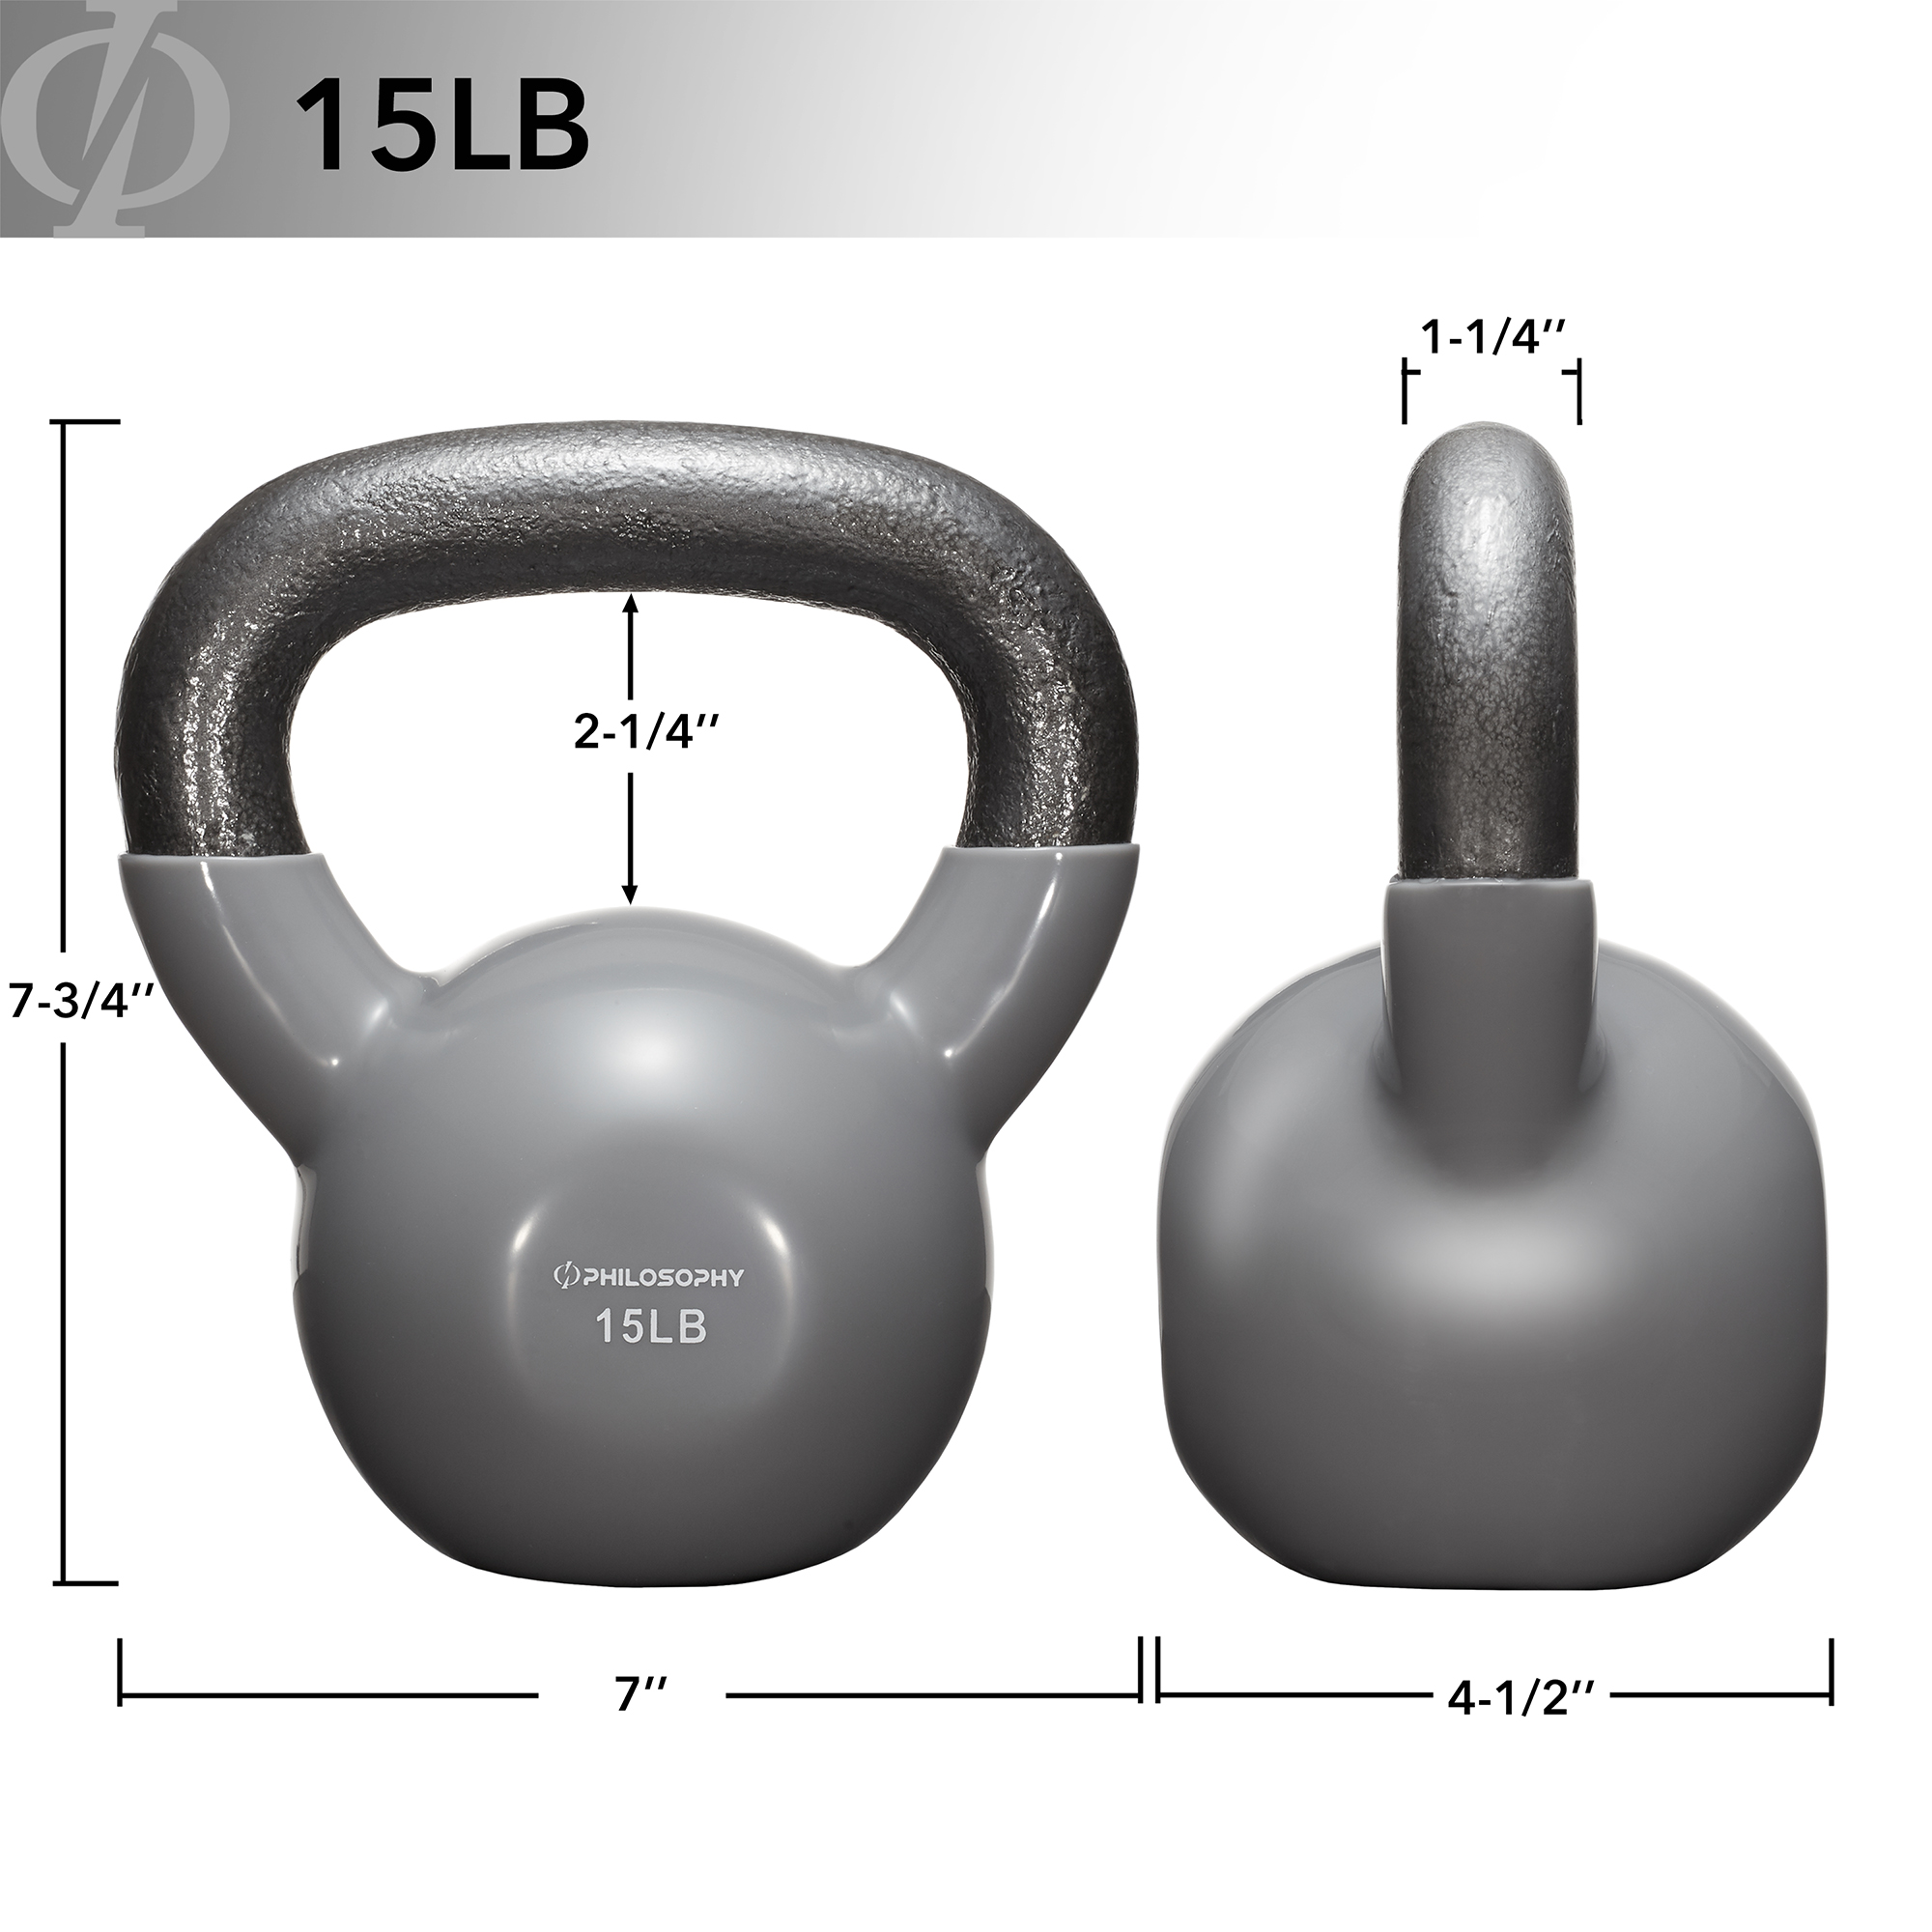 Philosophy Gym Vinyl Coated Cast Iron Kettlebell Weights (Set of 3) - 5 lb, 10 lb, 15 lb - Gray